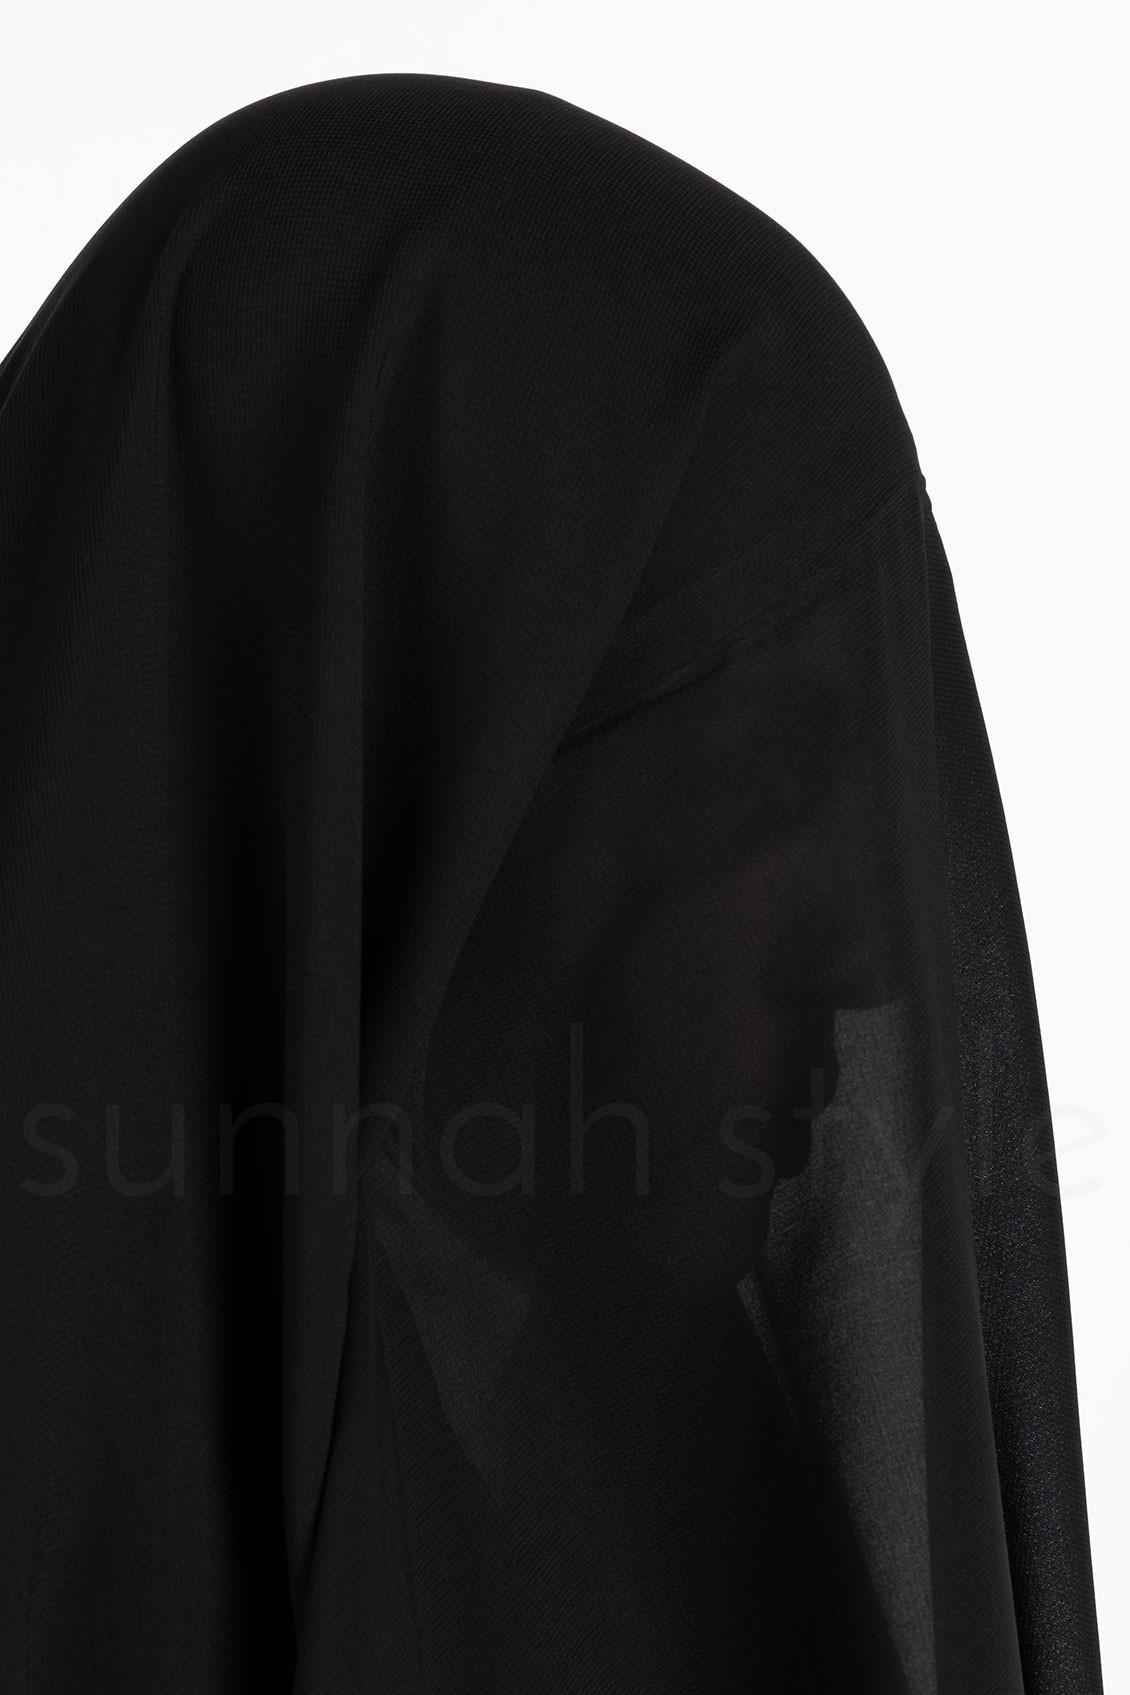 Sunnah Style 3-Layer Yemeni Khimar Black